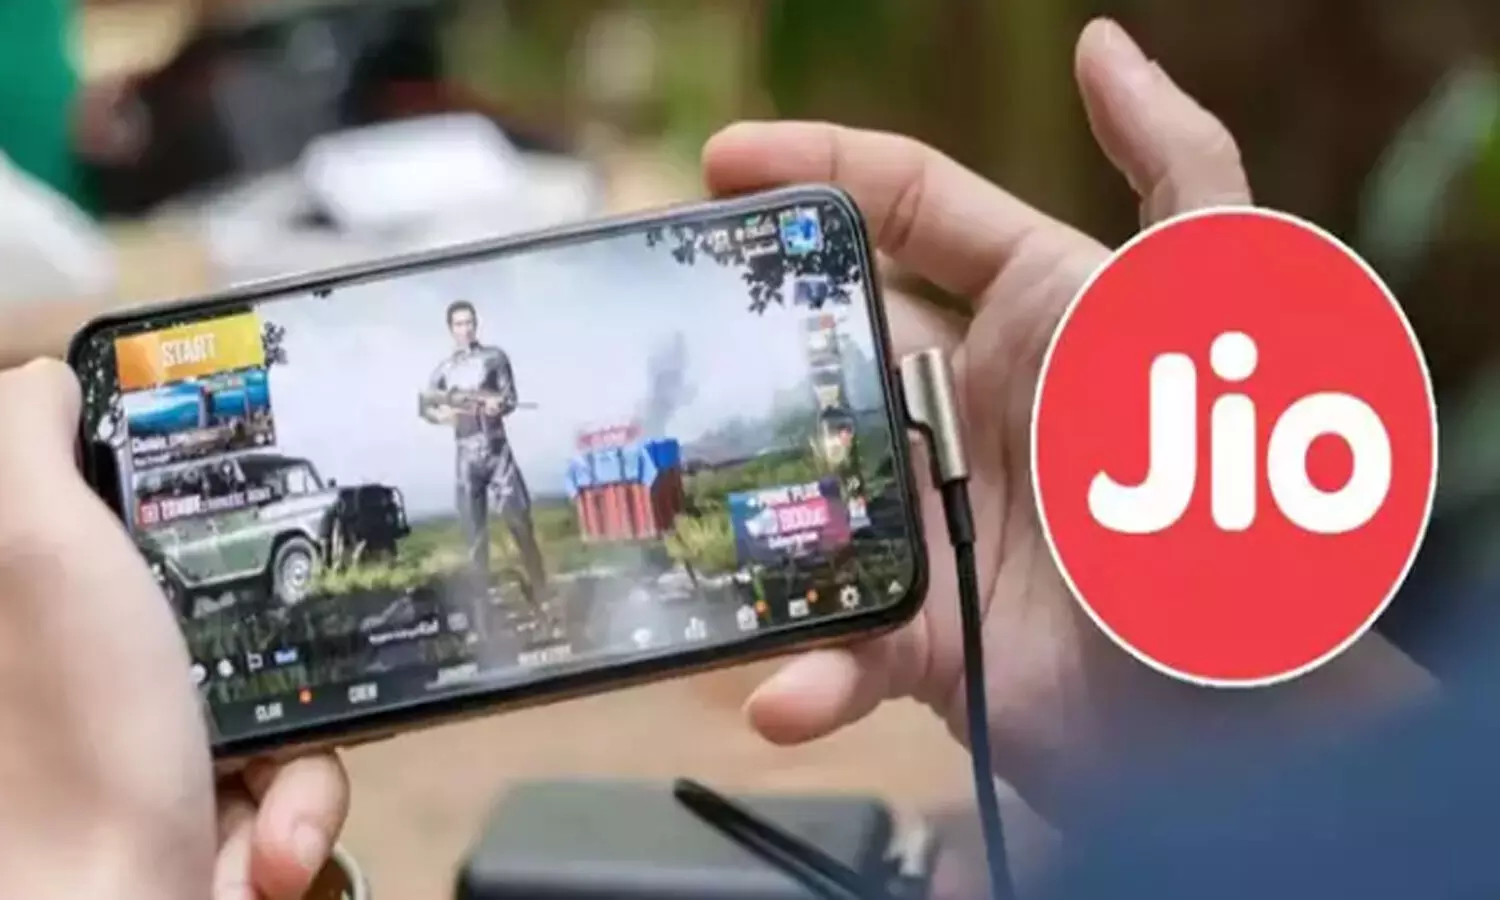 JioGames launches streaming platform JioGamesWatch